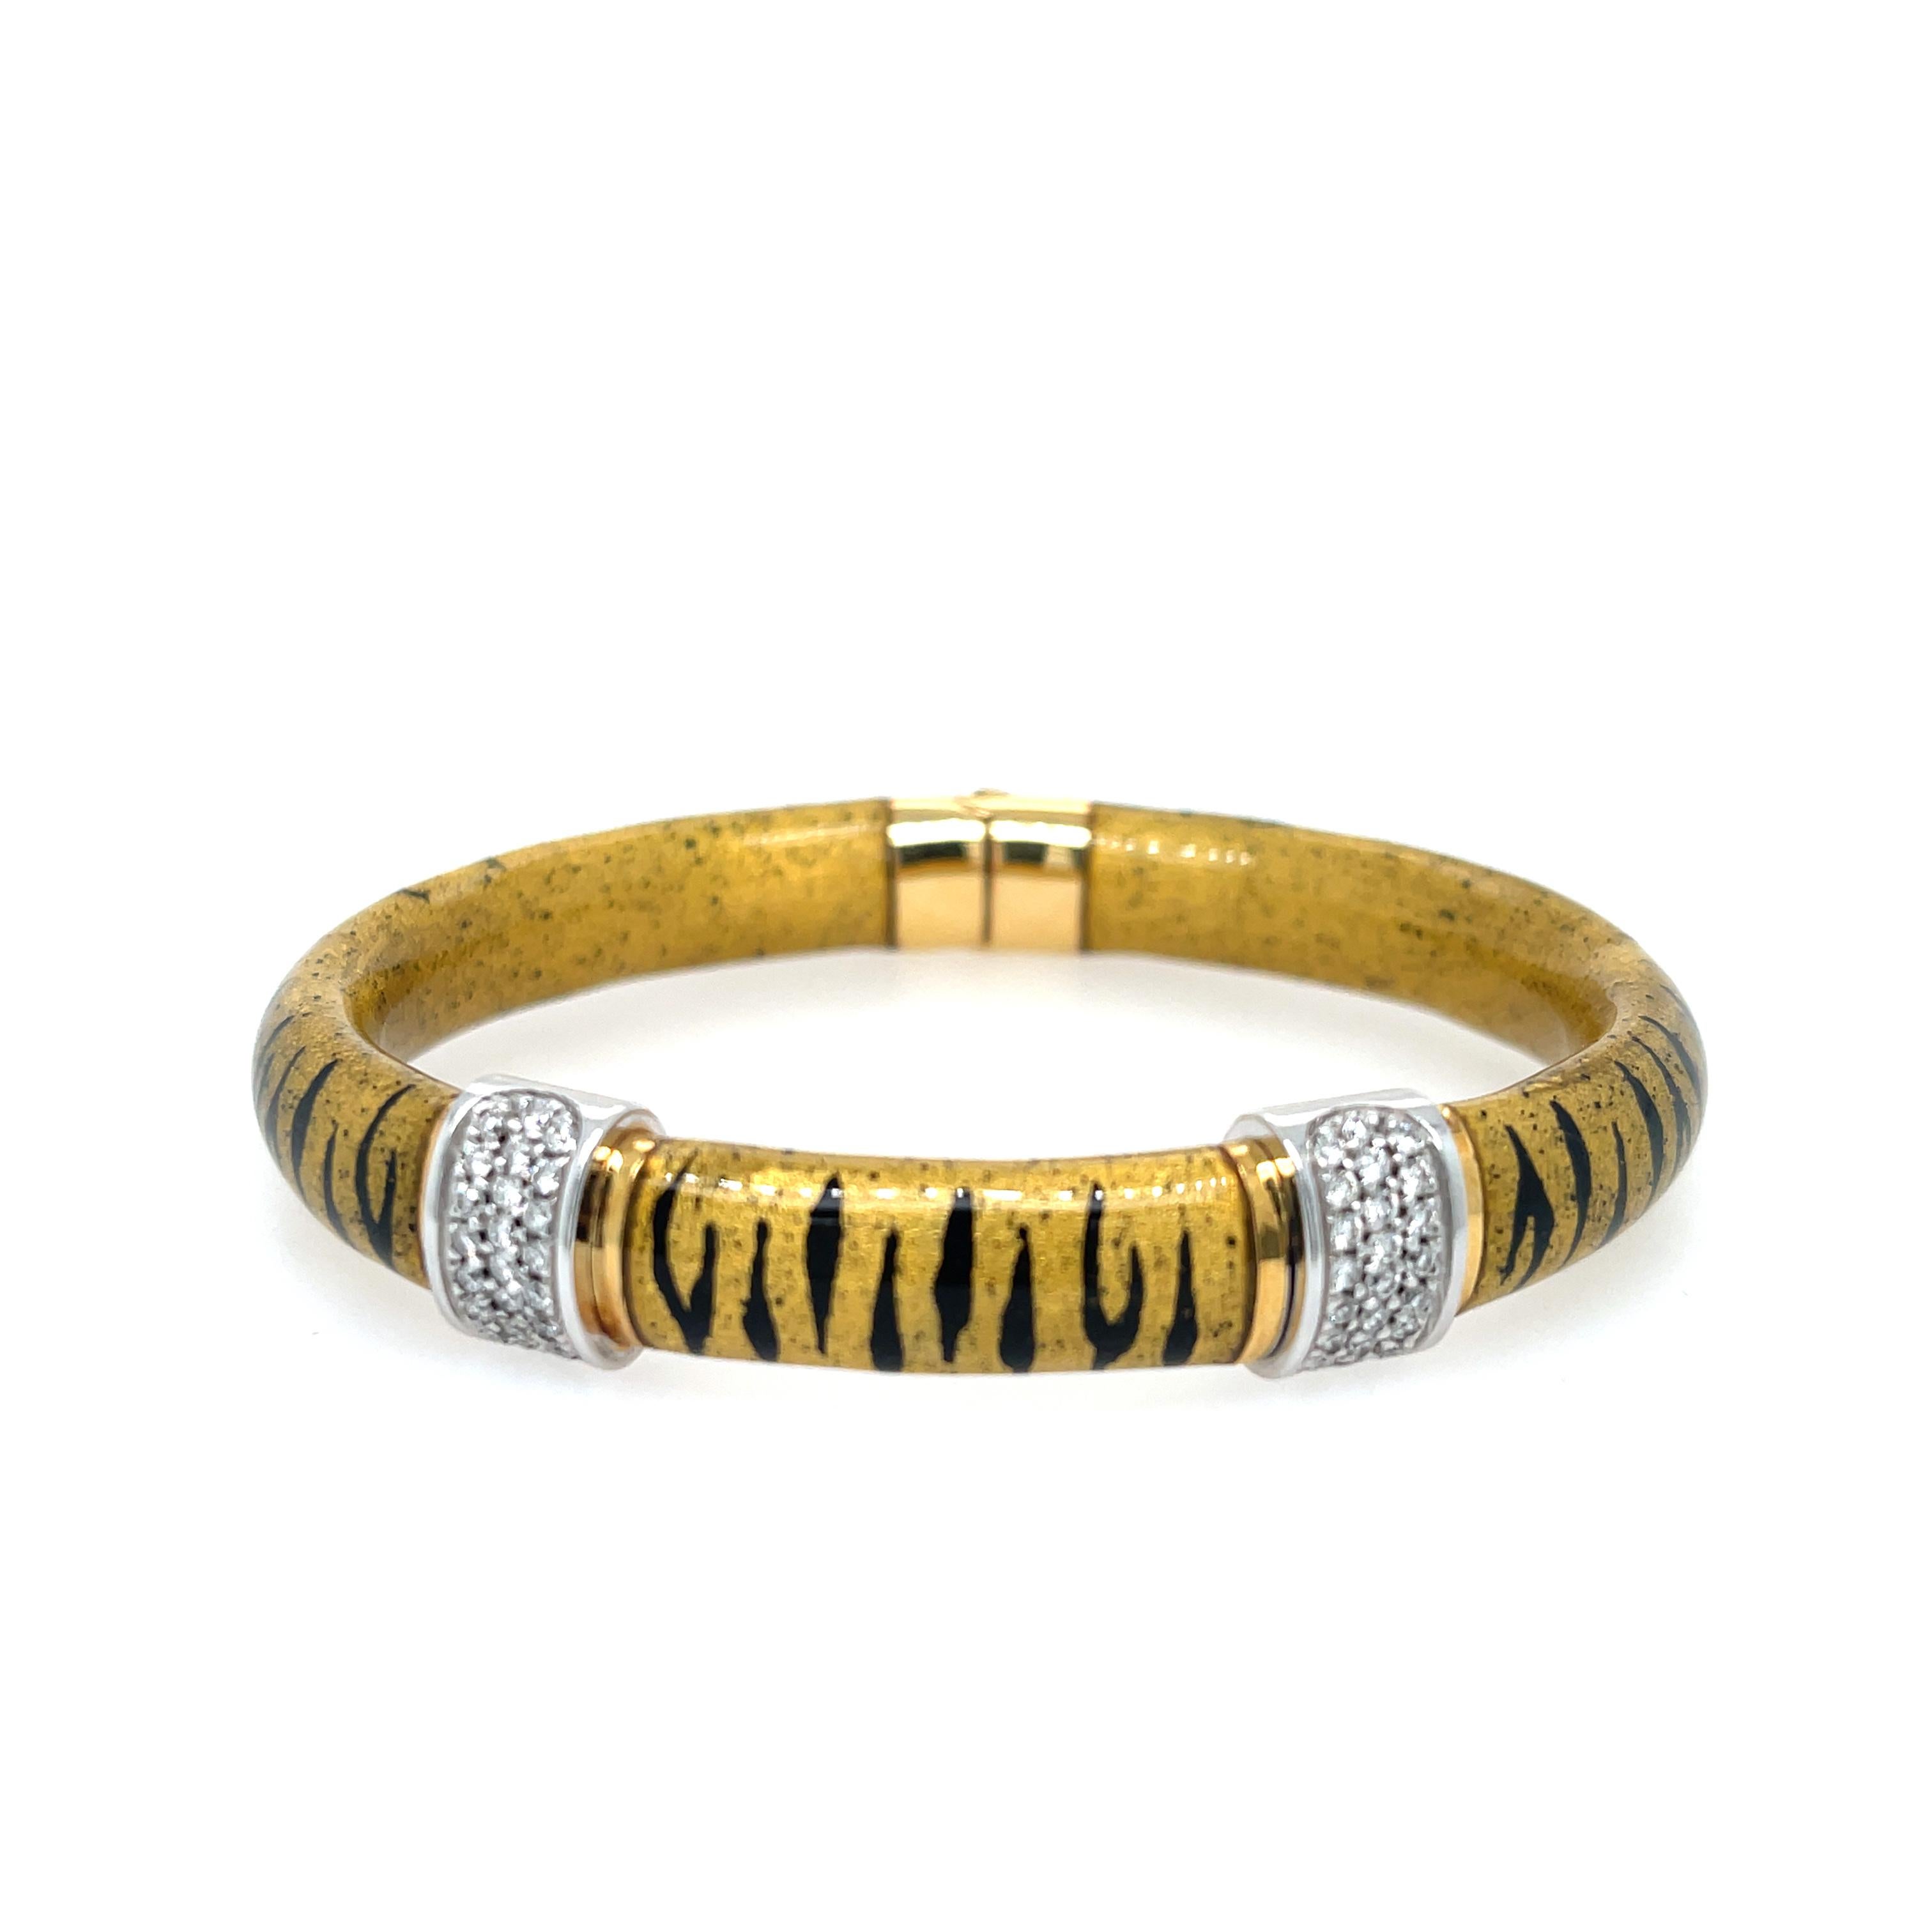 Estate SOHO Enamel Bracelet in 18K Gold. Diamond 0.82ctw (G VS)
6.5